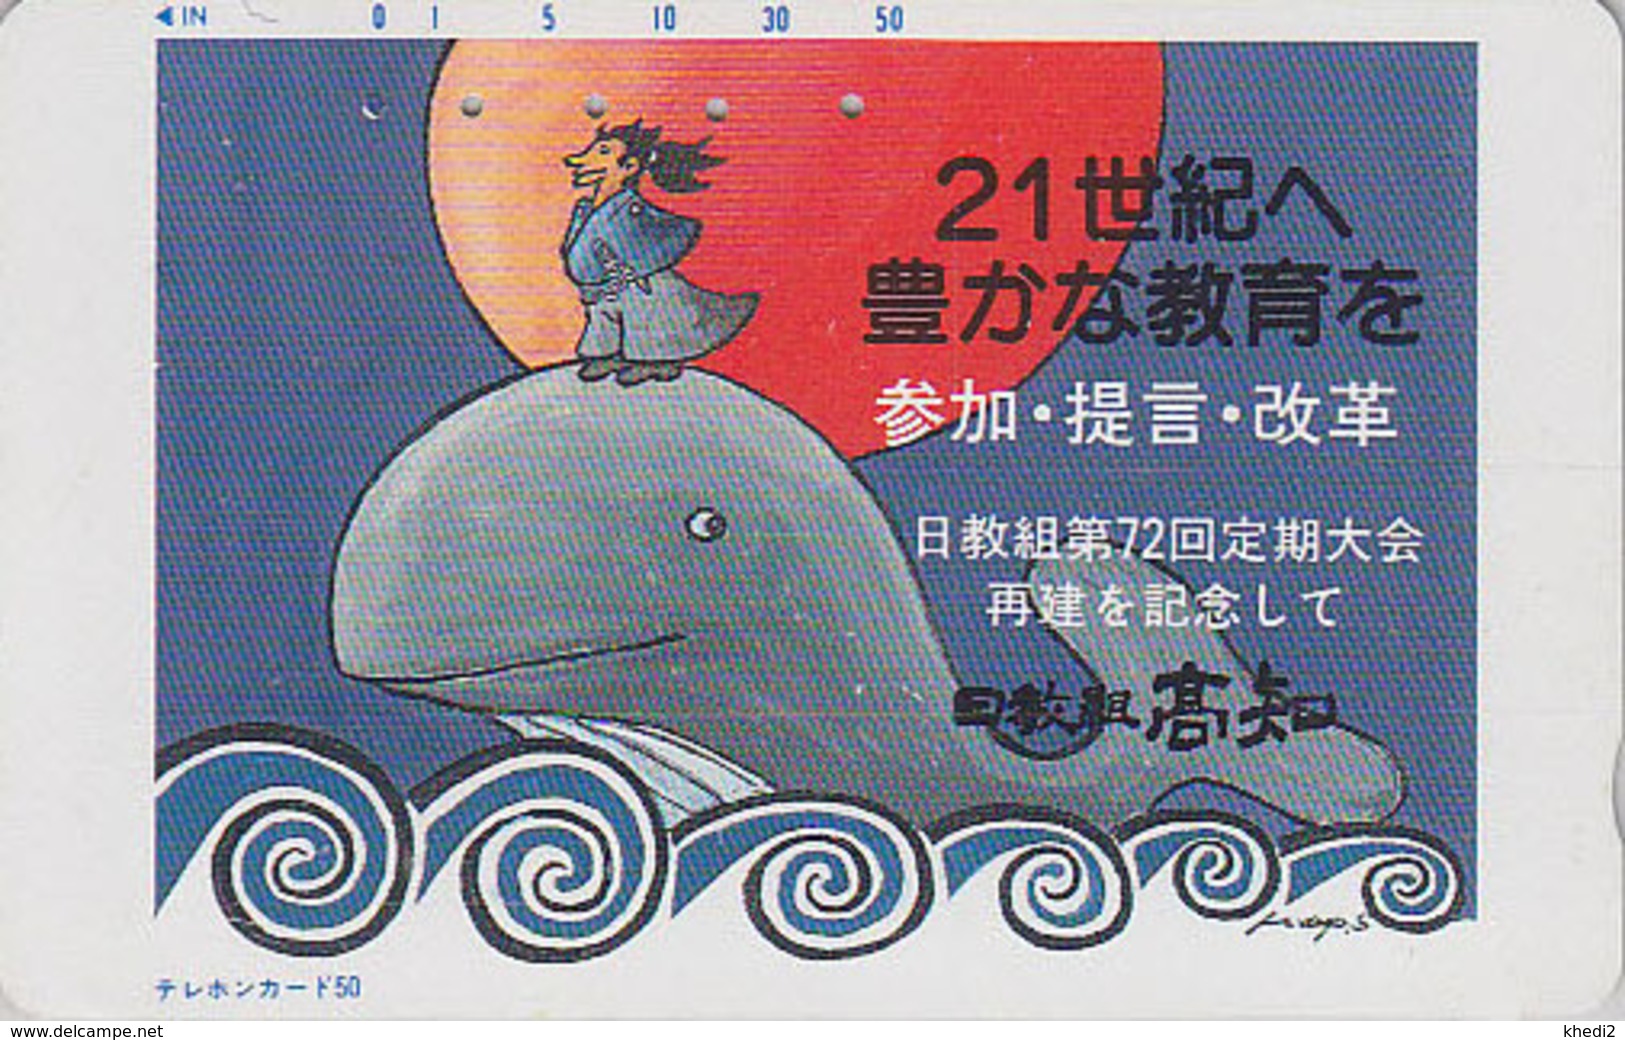 Télécarte Japon / 330-30220 - ANIMAL - BALEINE - WHALE & SUNSET Japan Phonecard - WAL Telefonkarte - Comics - 460 - Delfini